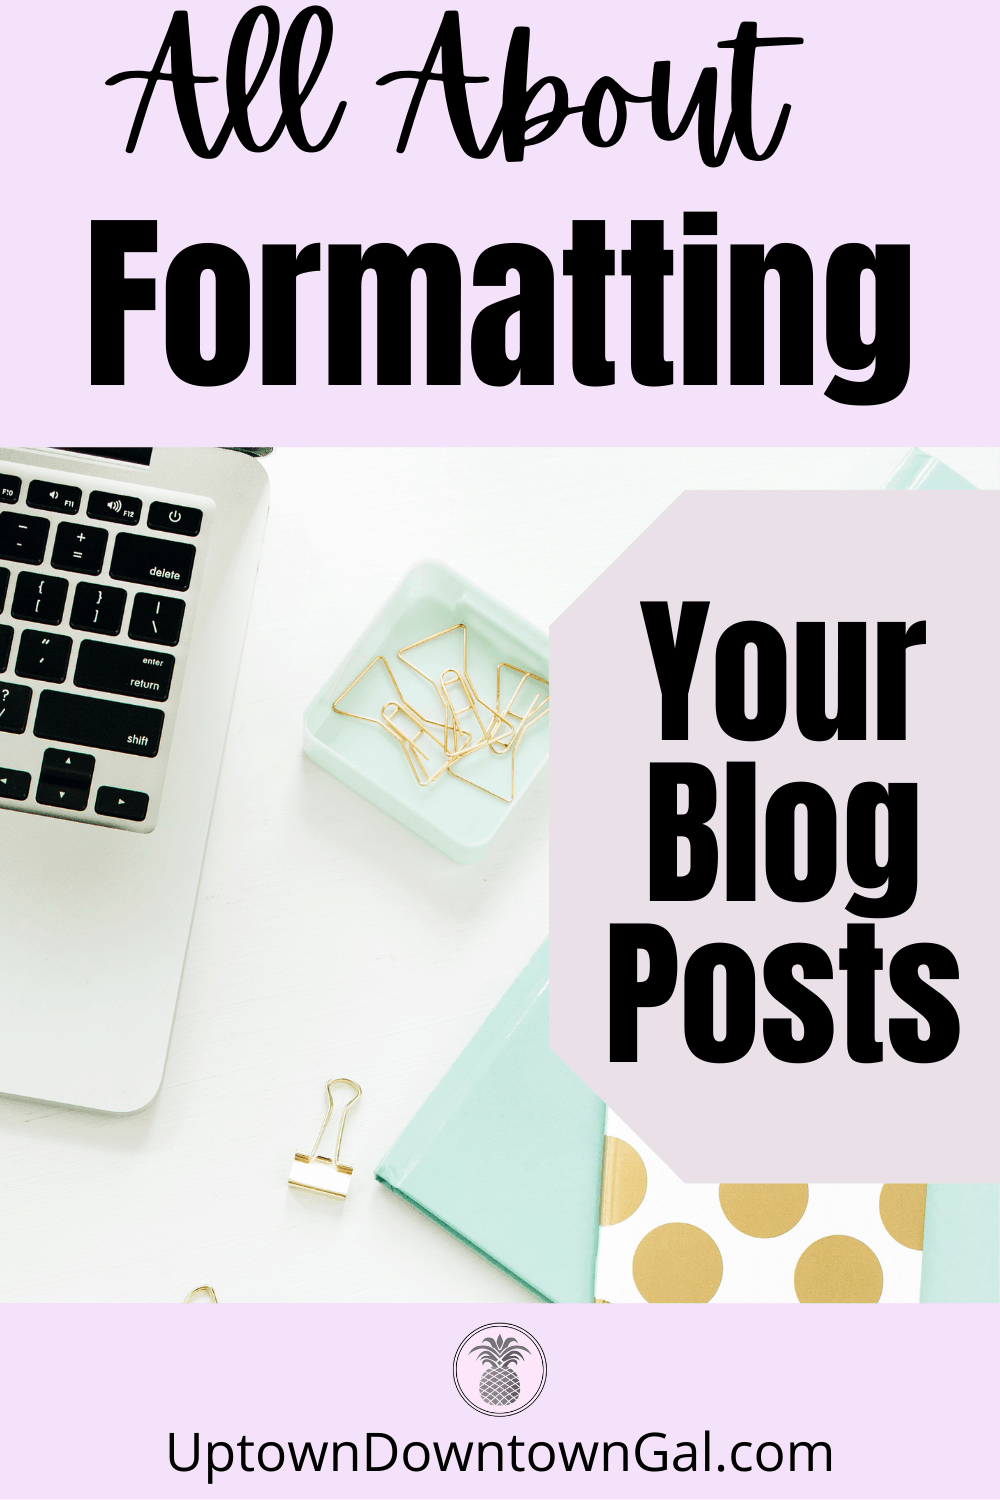 Golden Rules for Formatting Blogs